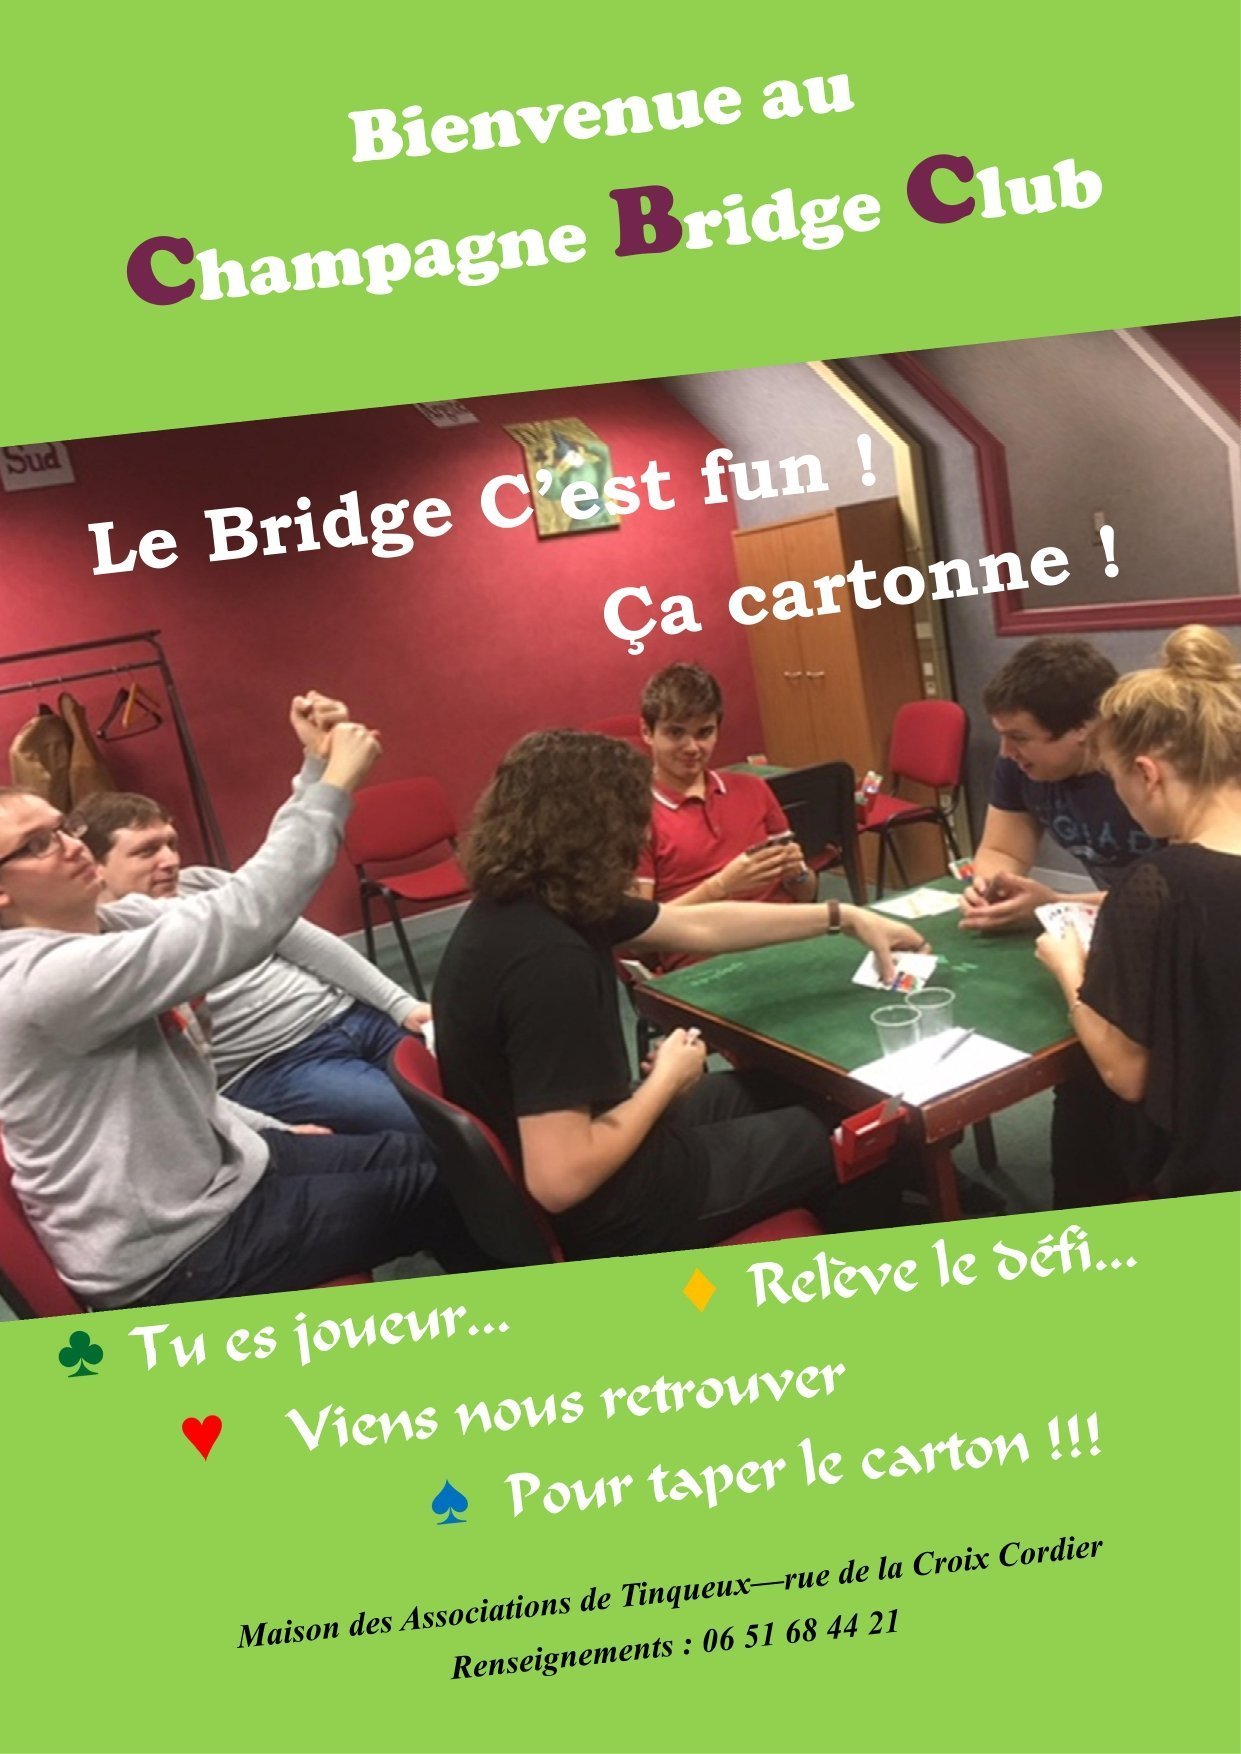 A free quarter to discover bridge at the Champagne Bridge Club in Tinqueux